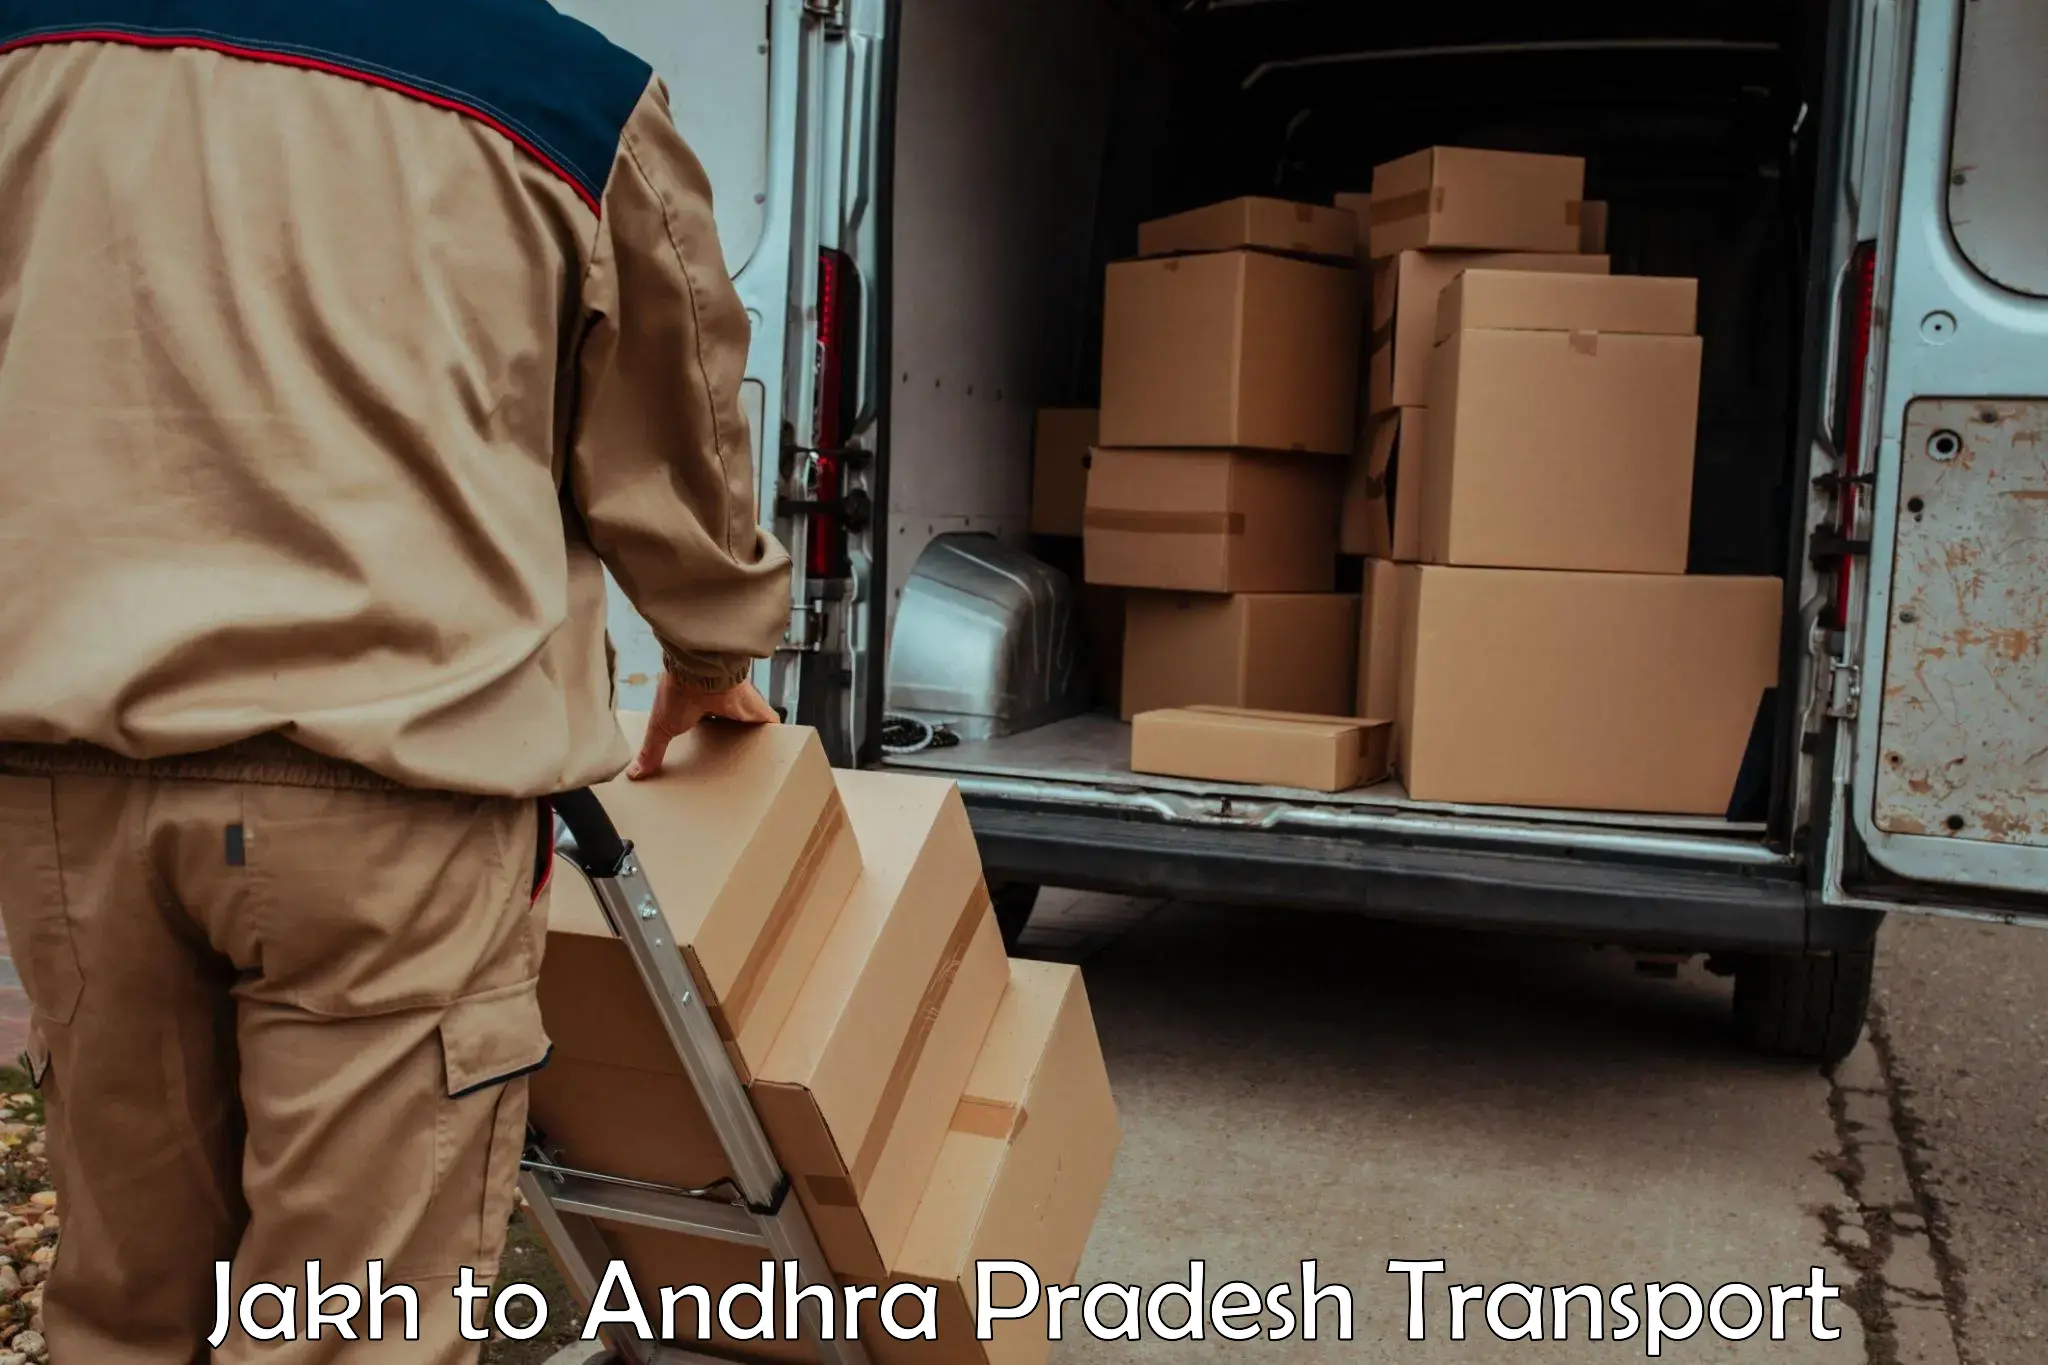 Truck transport companies in India Jakh to Gopalapuram